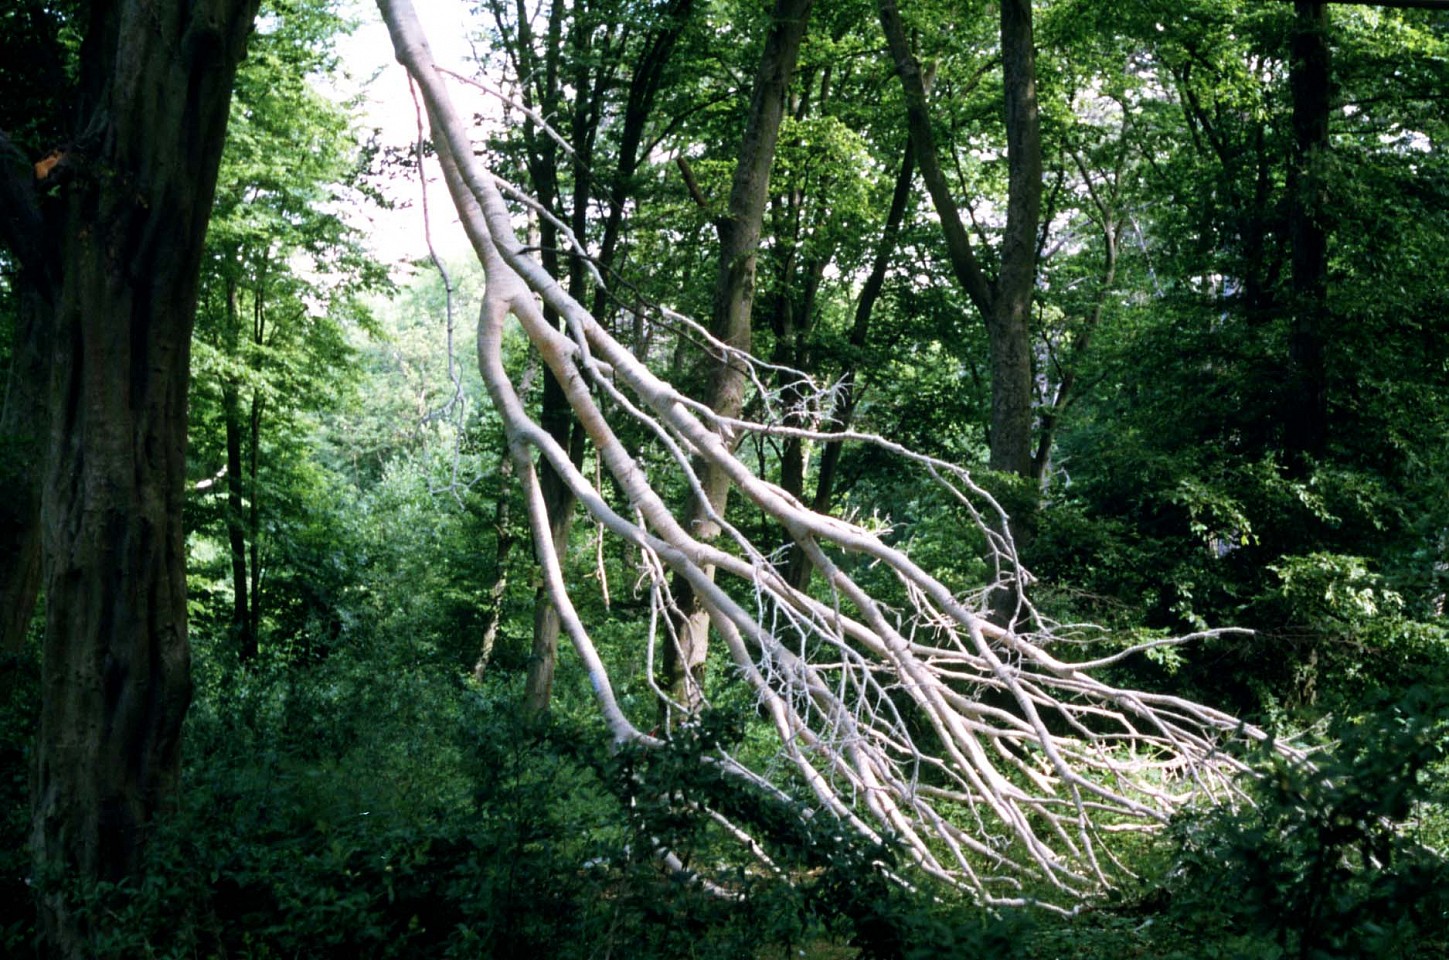 Jane Dunn
Dying Branch, 1996
felt, wood, 240 x 180 x 180 in.